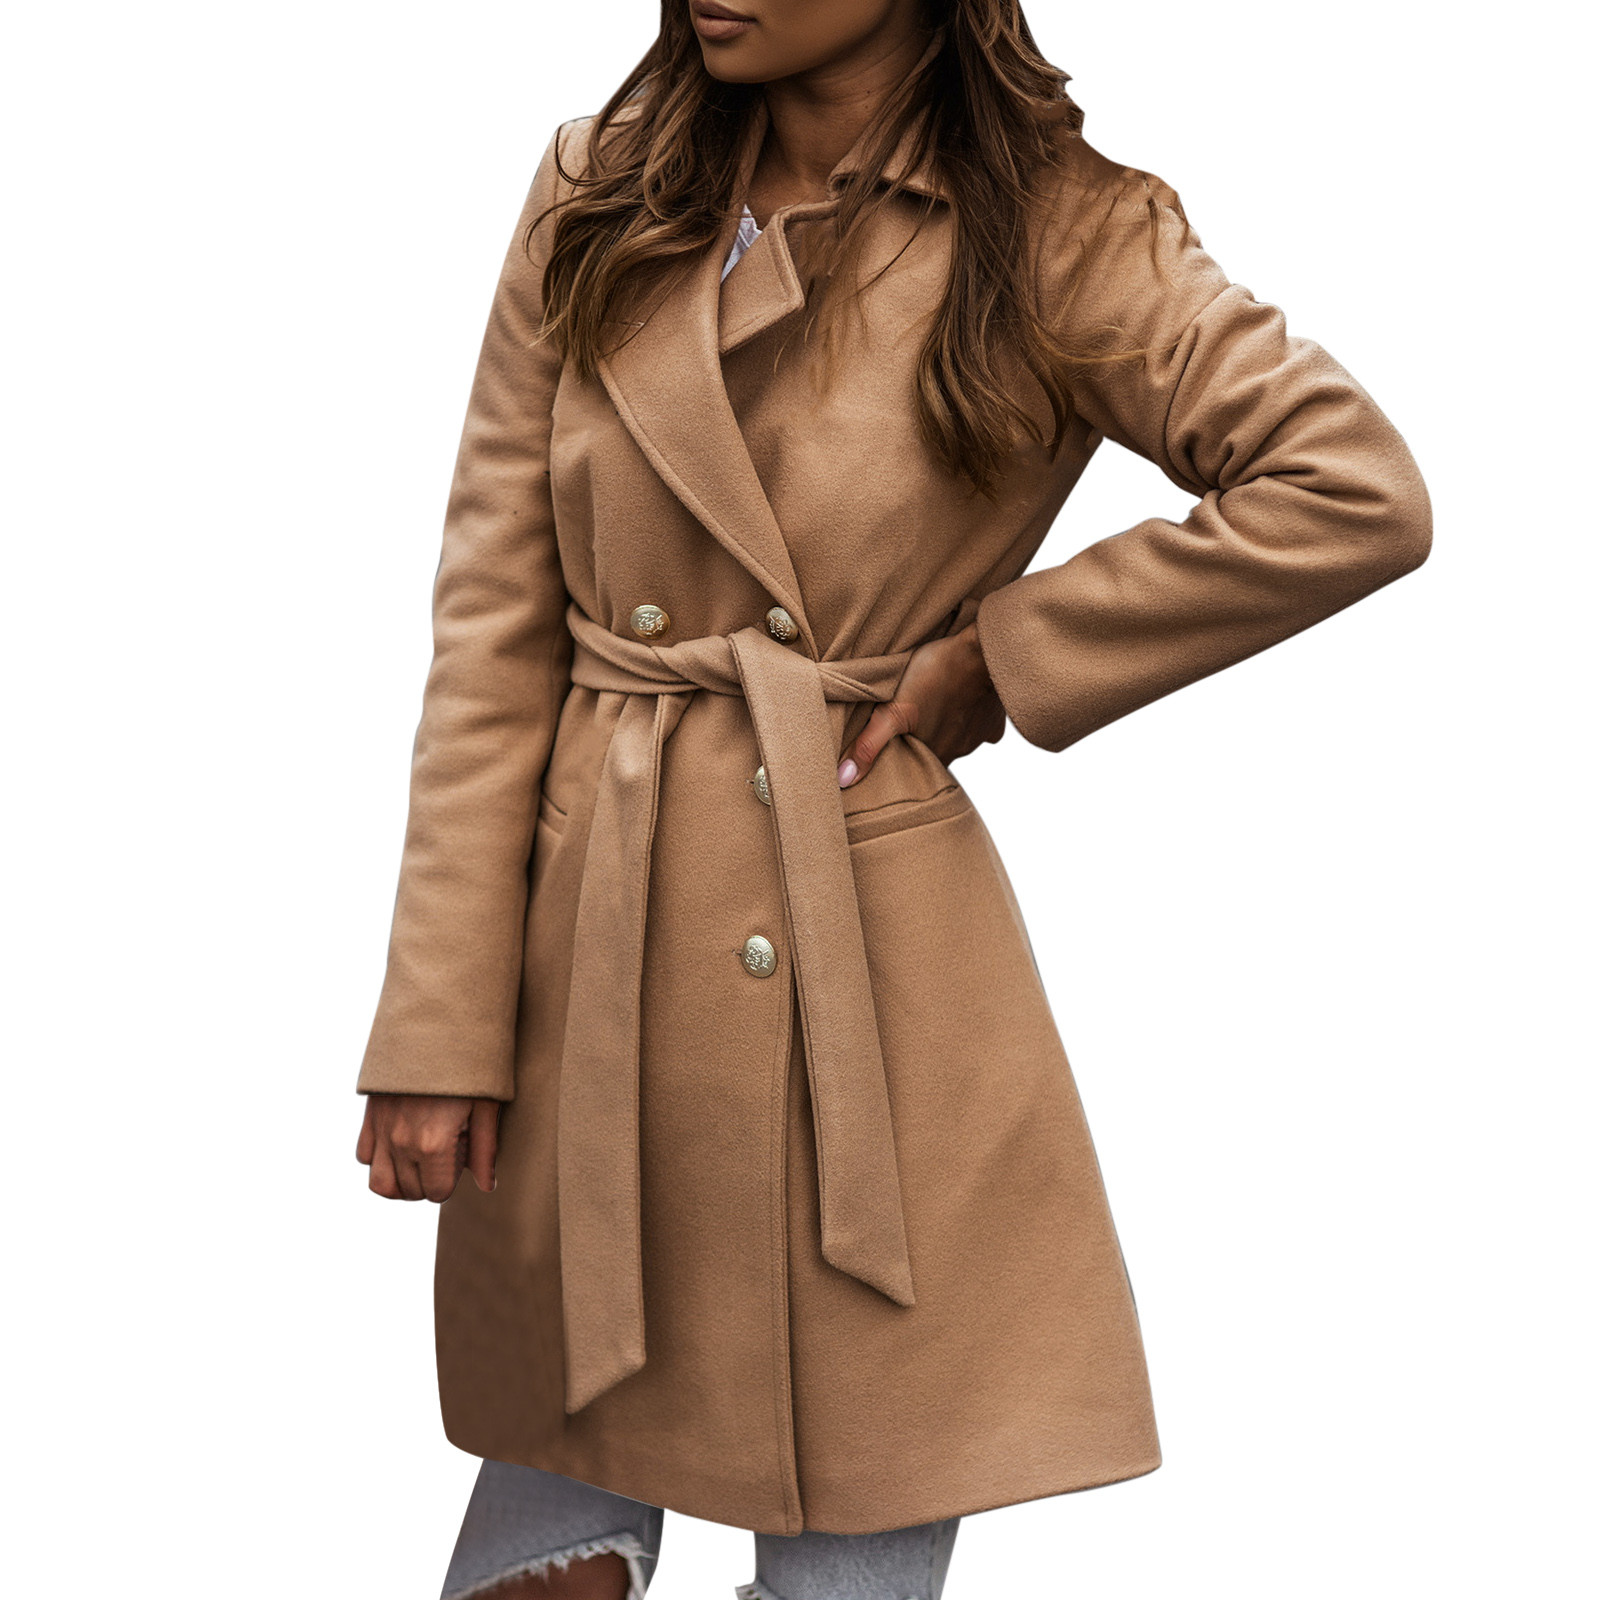 Daznico Jackets for Women Women's Coat Thin Coat Trench Jacket Suit Collar Double Long Sleeve Belt Button len Coat Khaki L - image 2 of 9